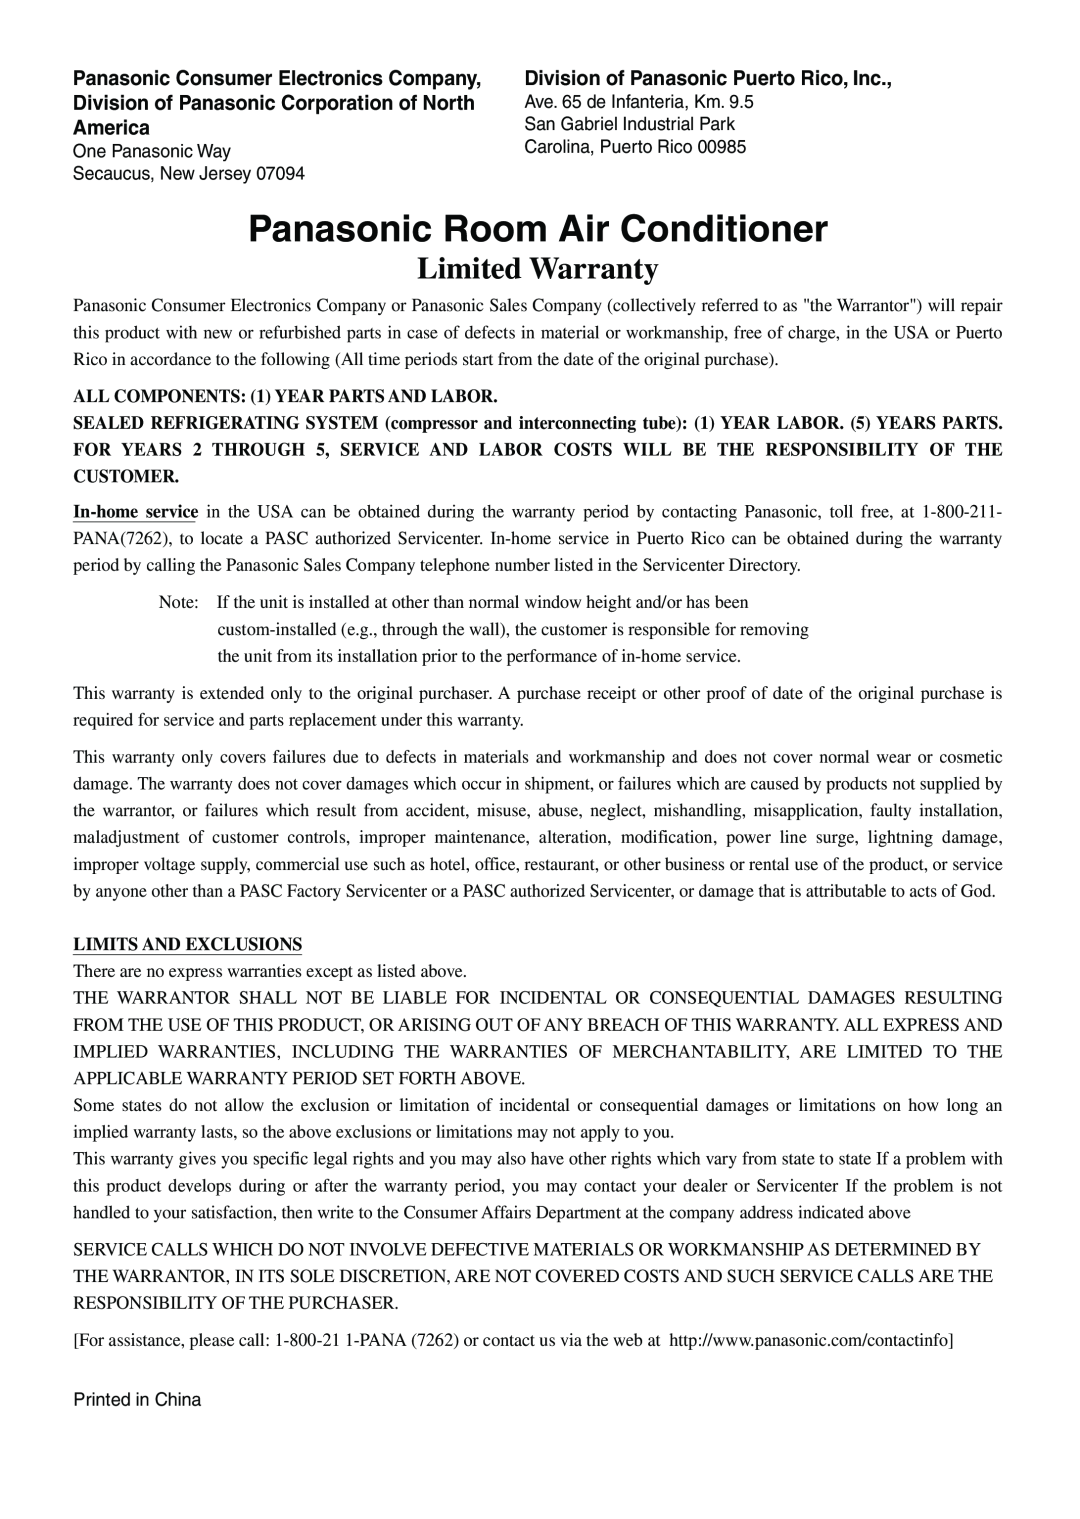 Panasonic CW-XC85HU, CW-XC65HU Panasonic Room Air Conditioner, Limited Warranty, Division of Panasonic Puerto Rico, Inc 